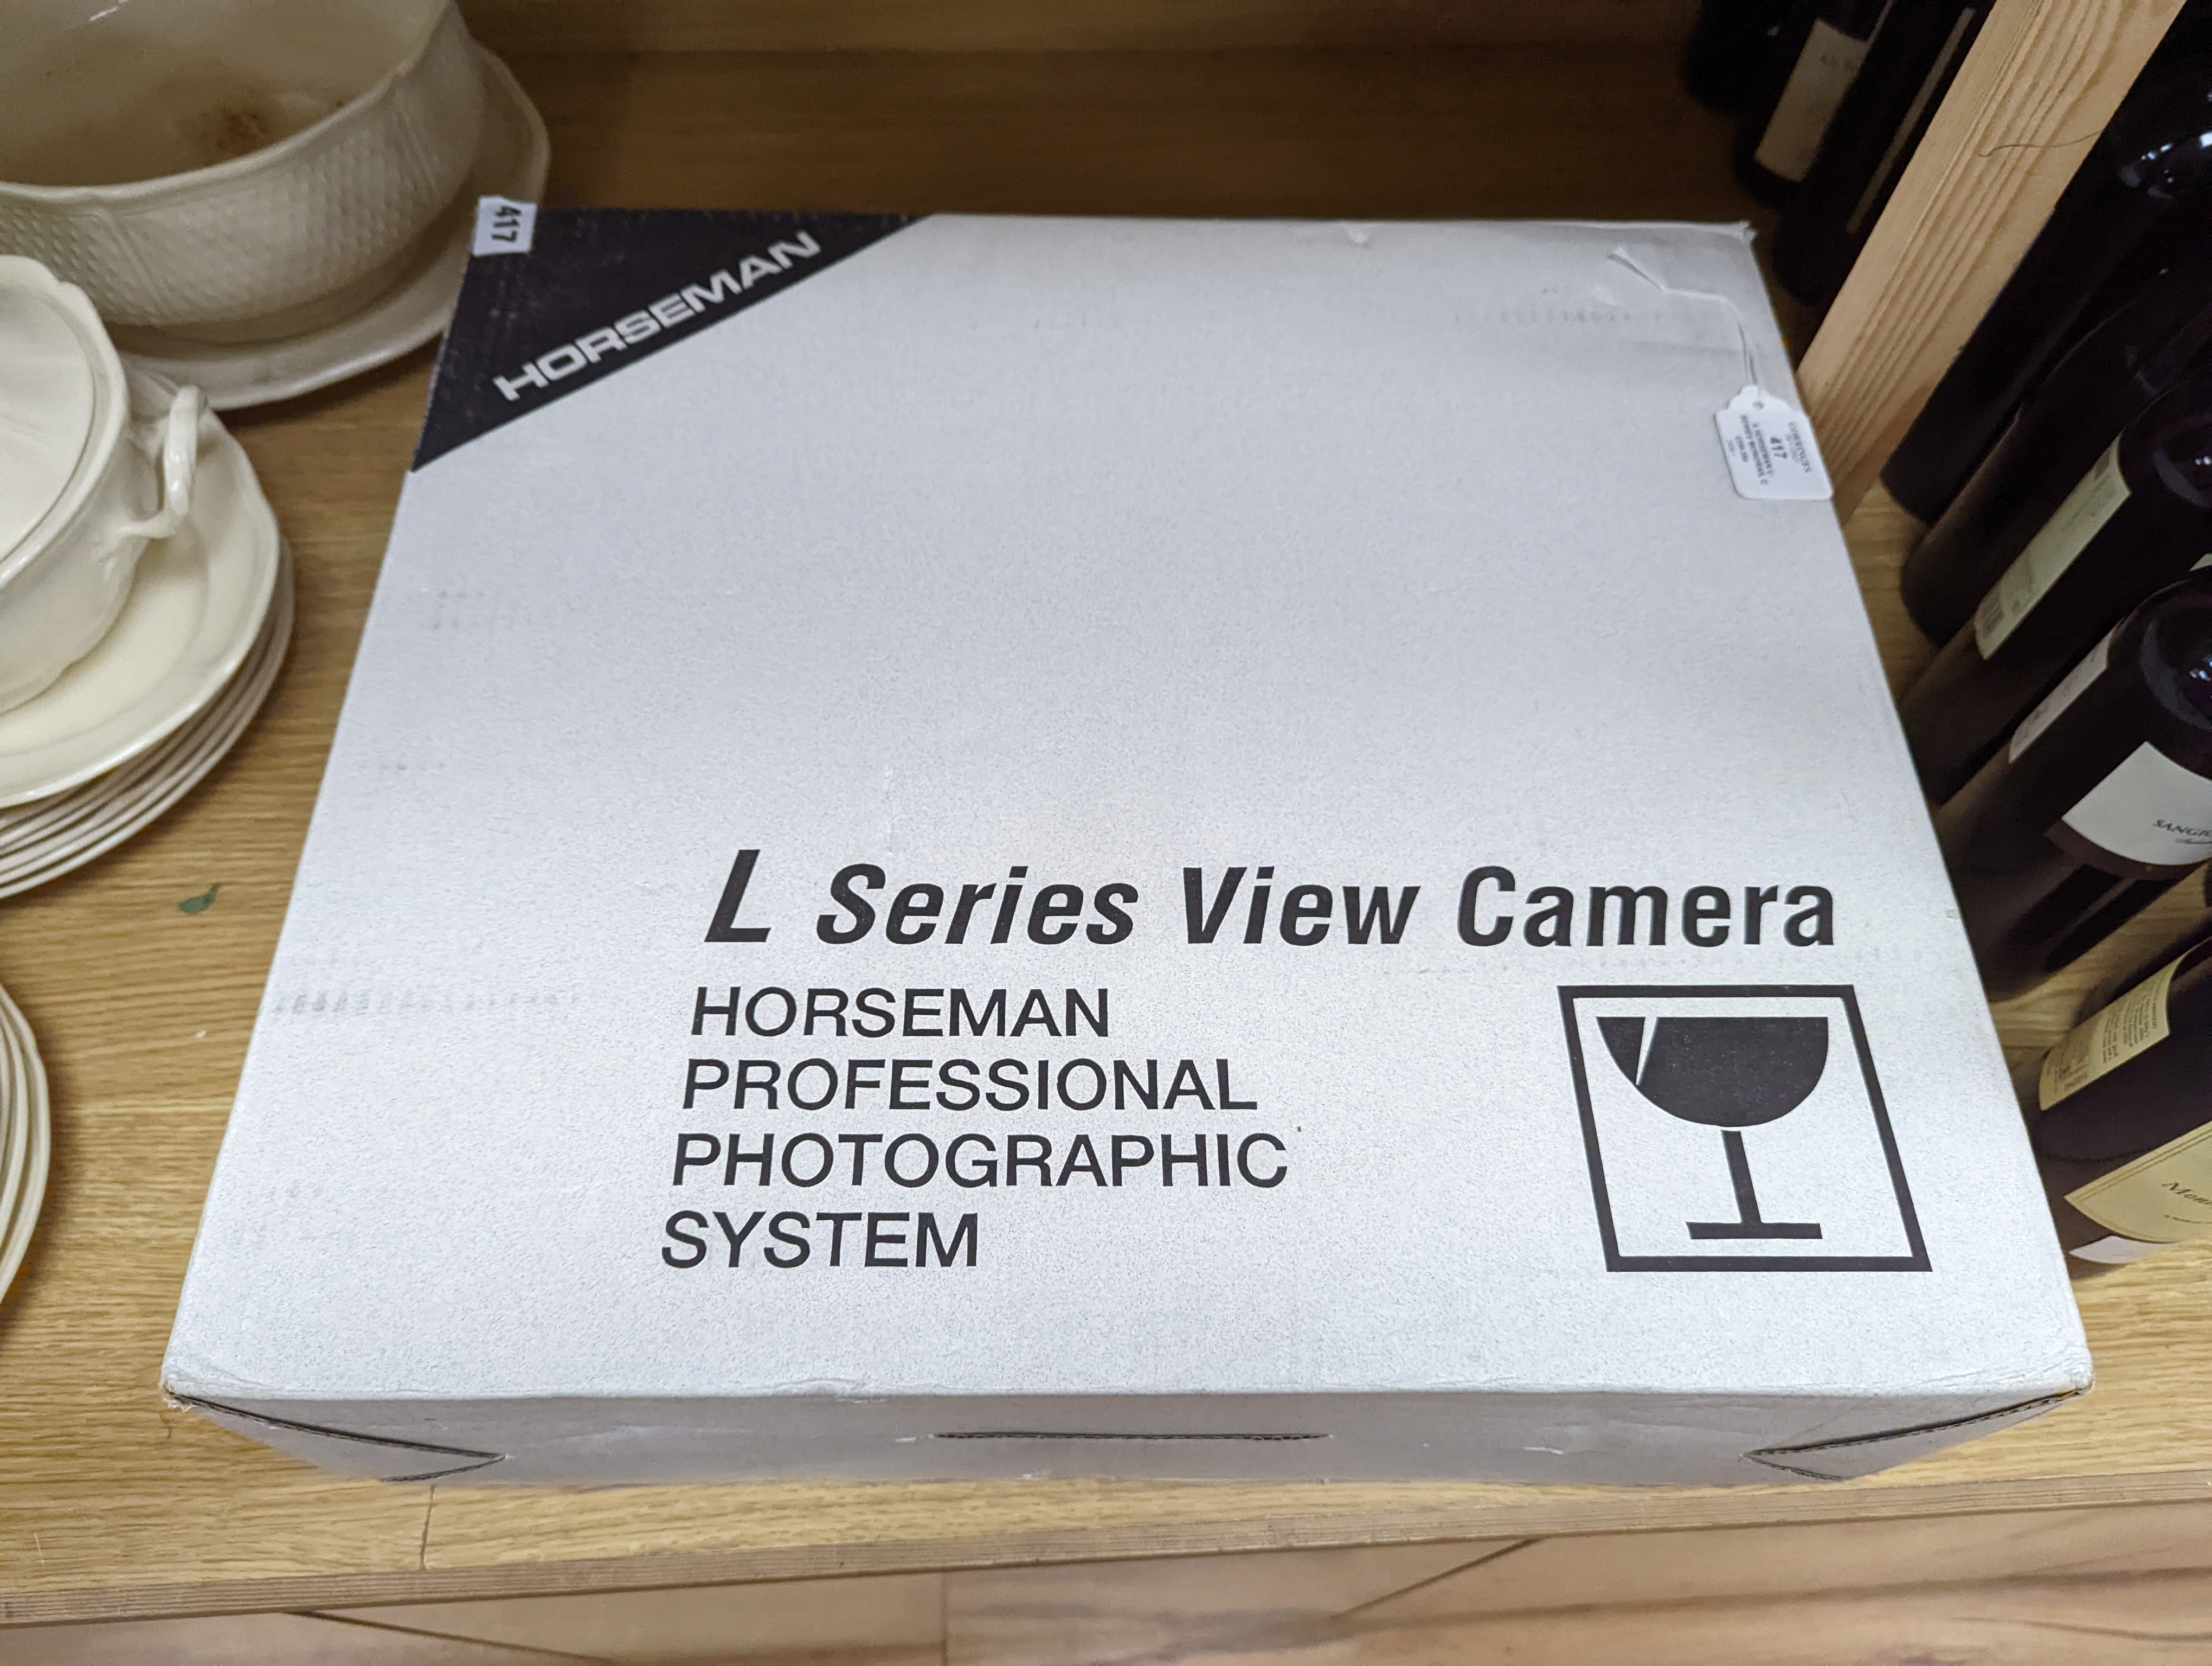 A Horseman L-Series monorail camera with Bino Reflex viewer and a Schneider Kreuznach Apo-Symmar 5.6/210 lens, original boxes